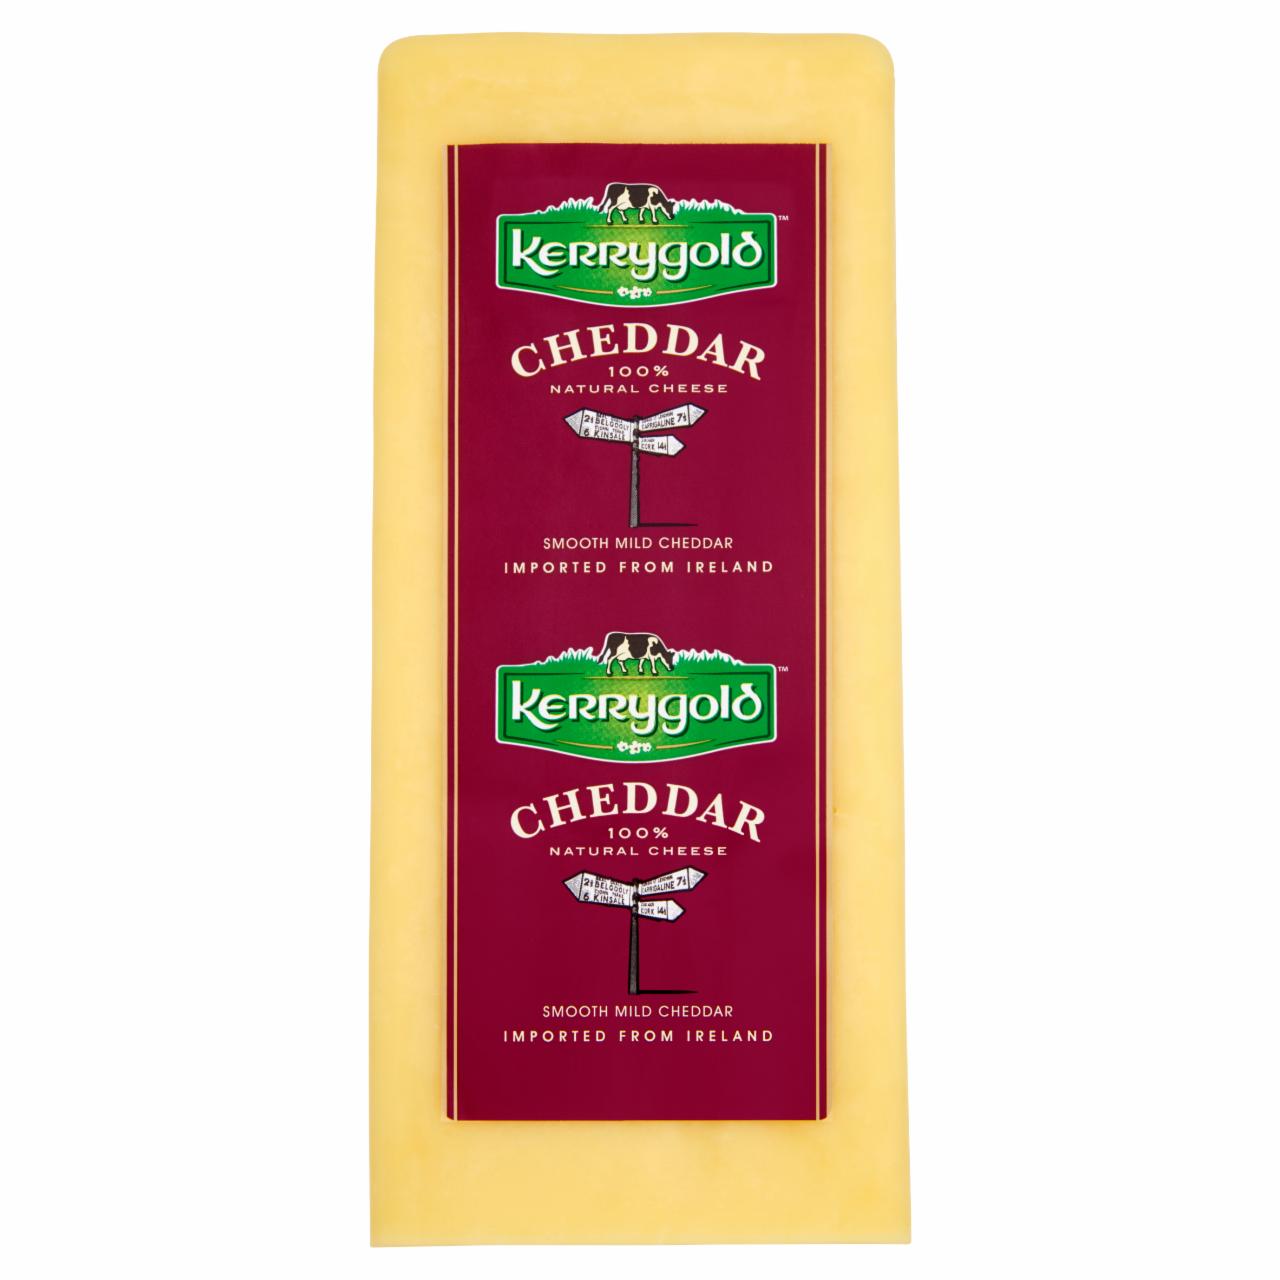 Képek - Kerrygold cheddar sajt